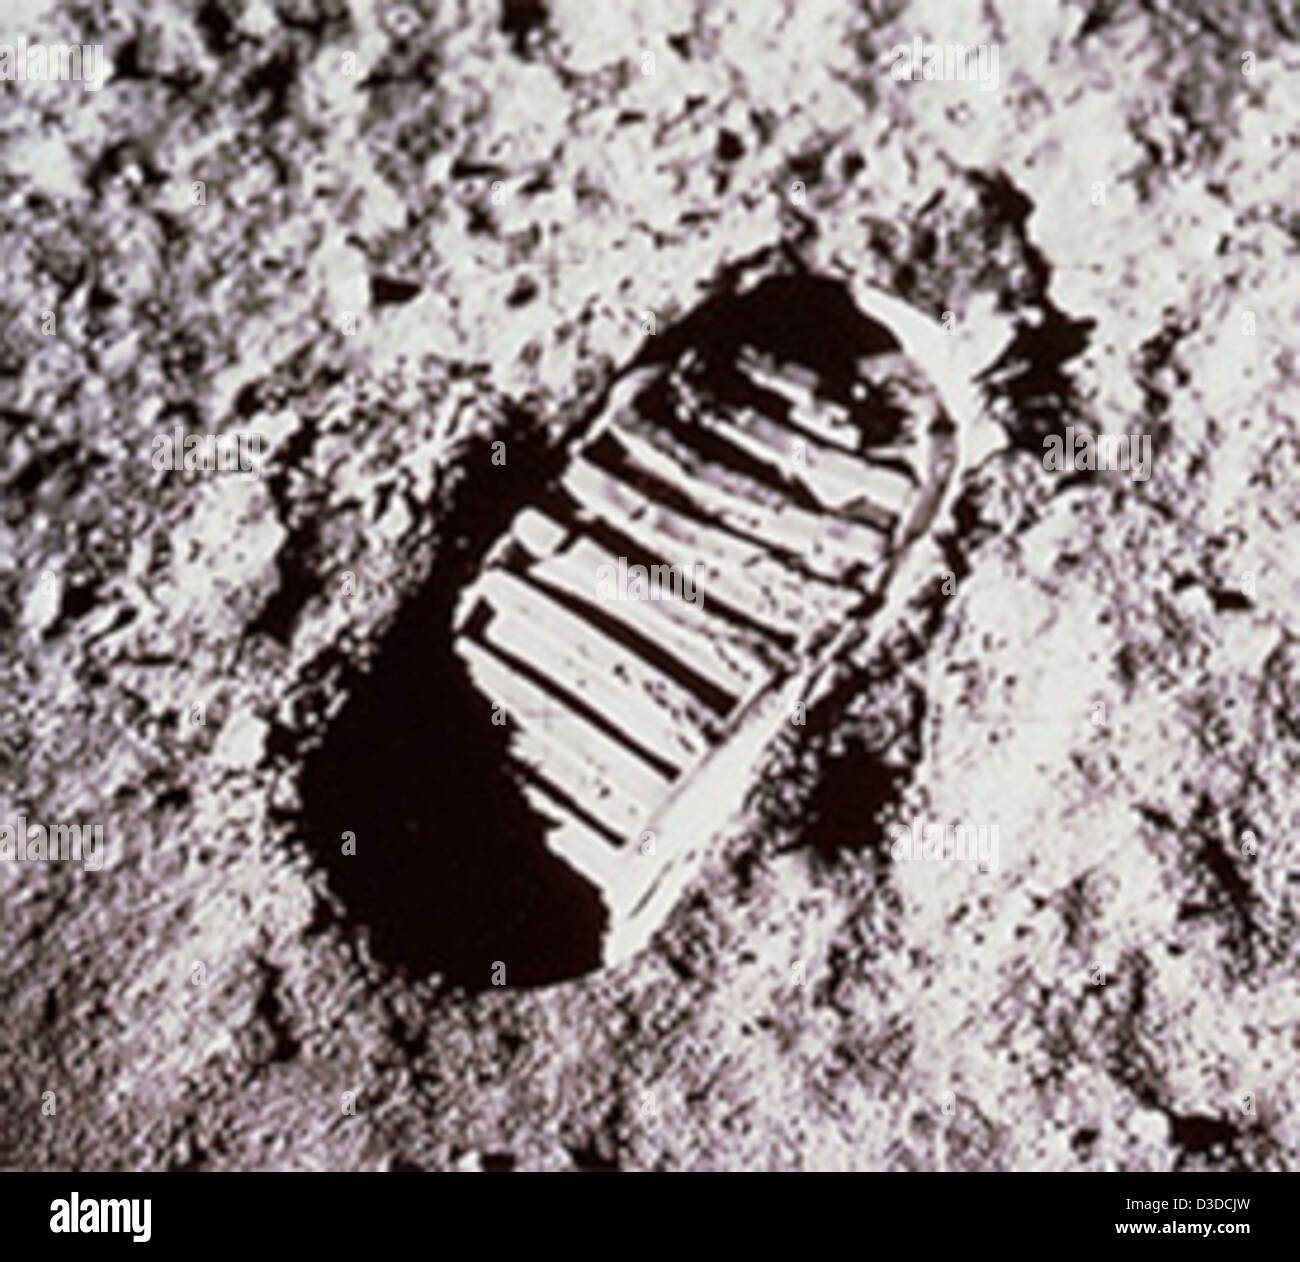 moon apollo 11 footprints